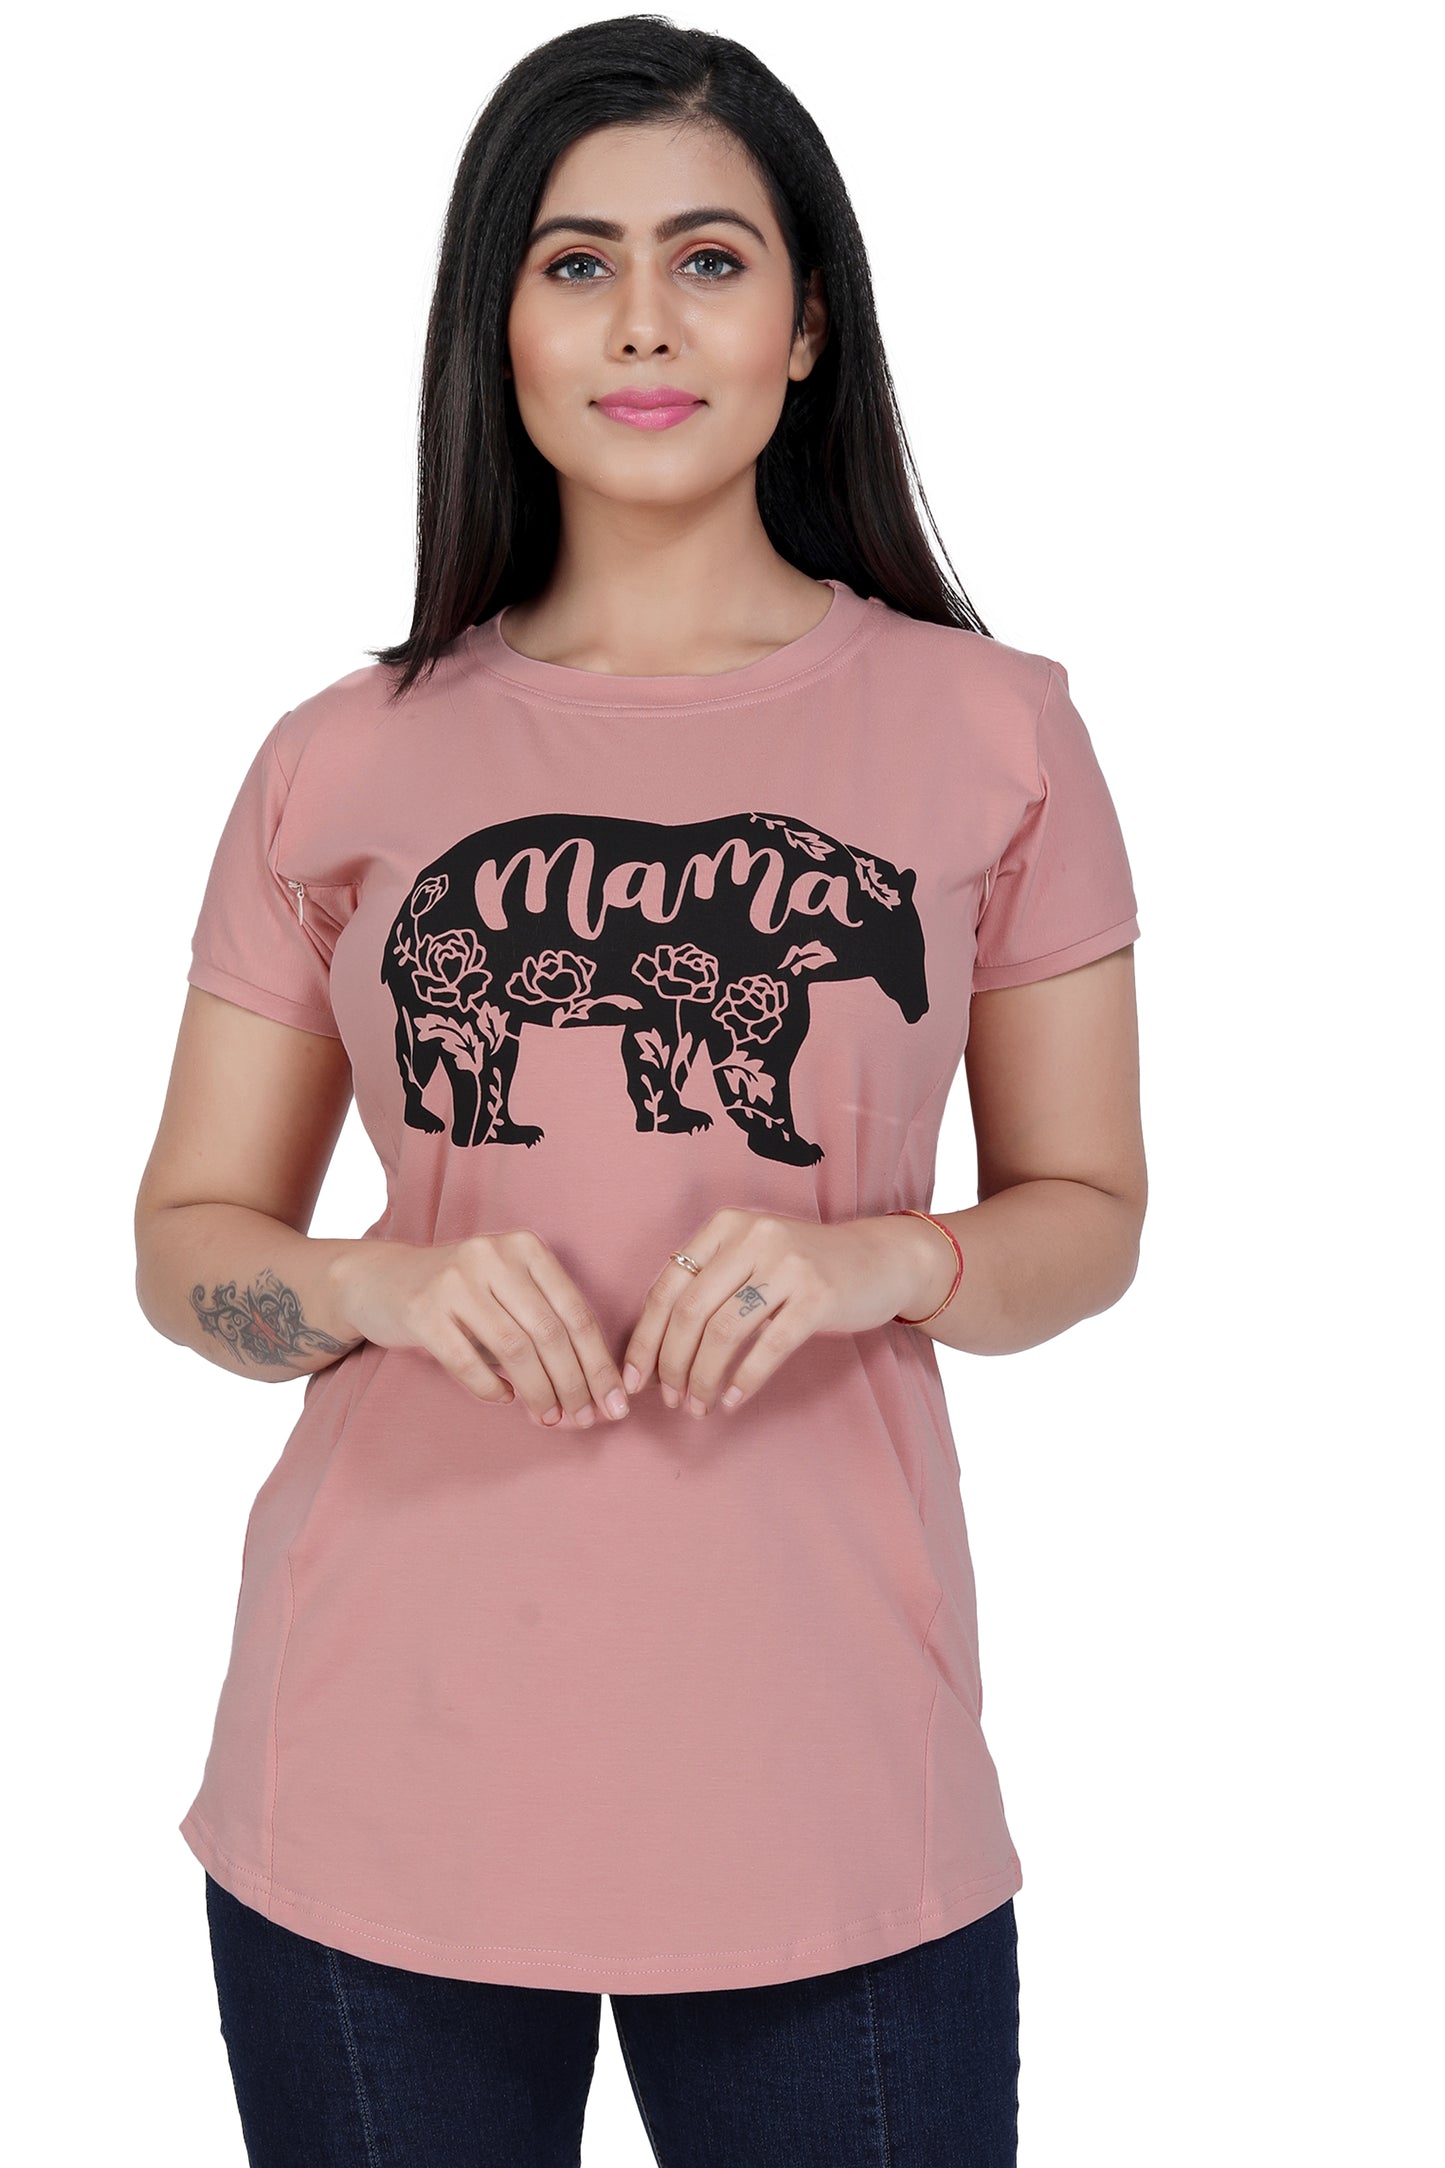 Women Cotton Feeding Top TShirt - Pink Bear